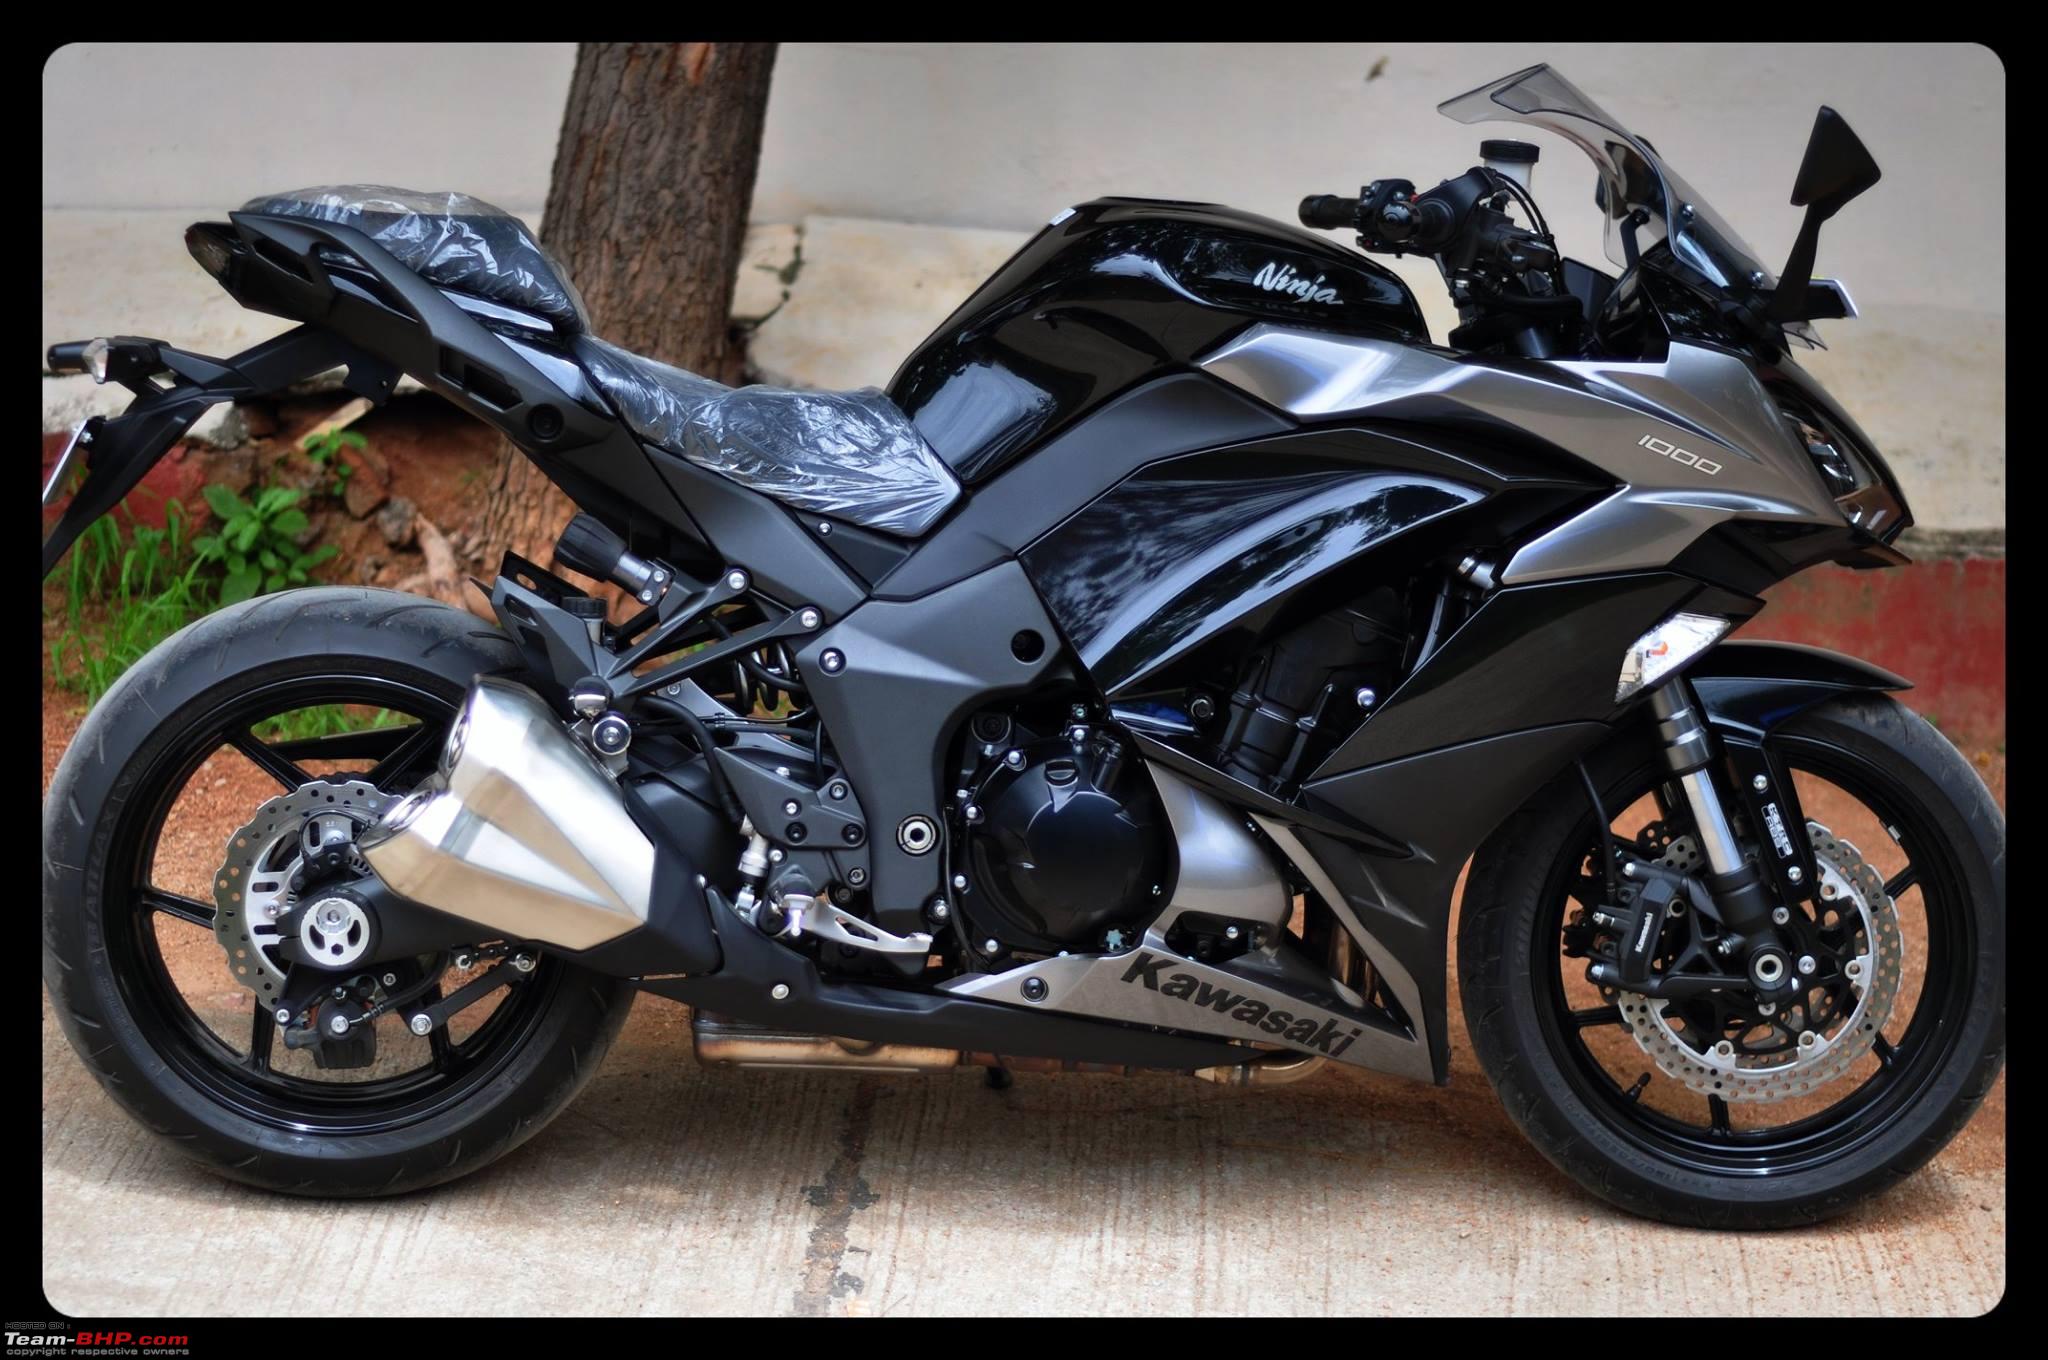 Kawasaki Ninja 1000cc Price Rs 9, 98,000 lakh. — Steemit